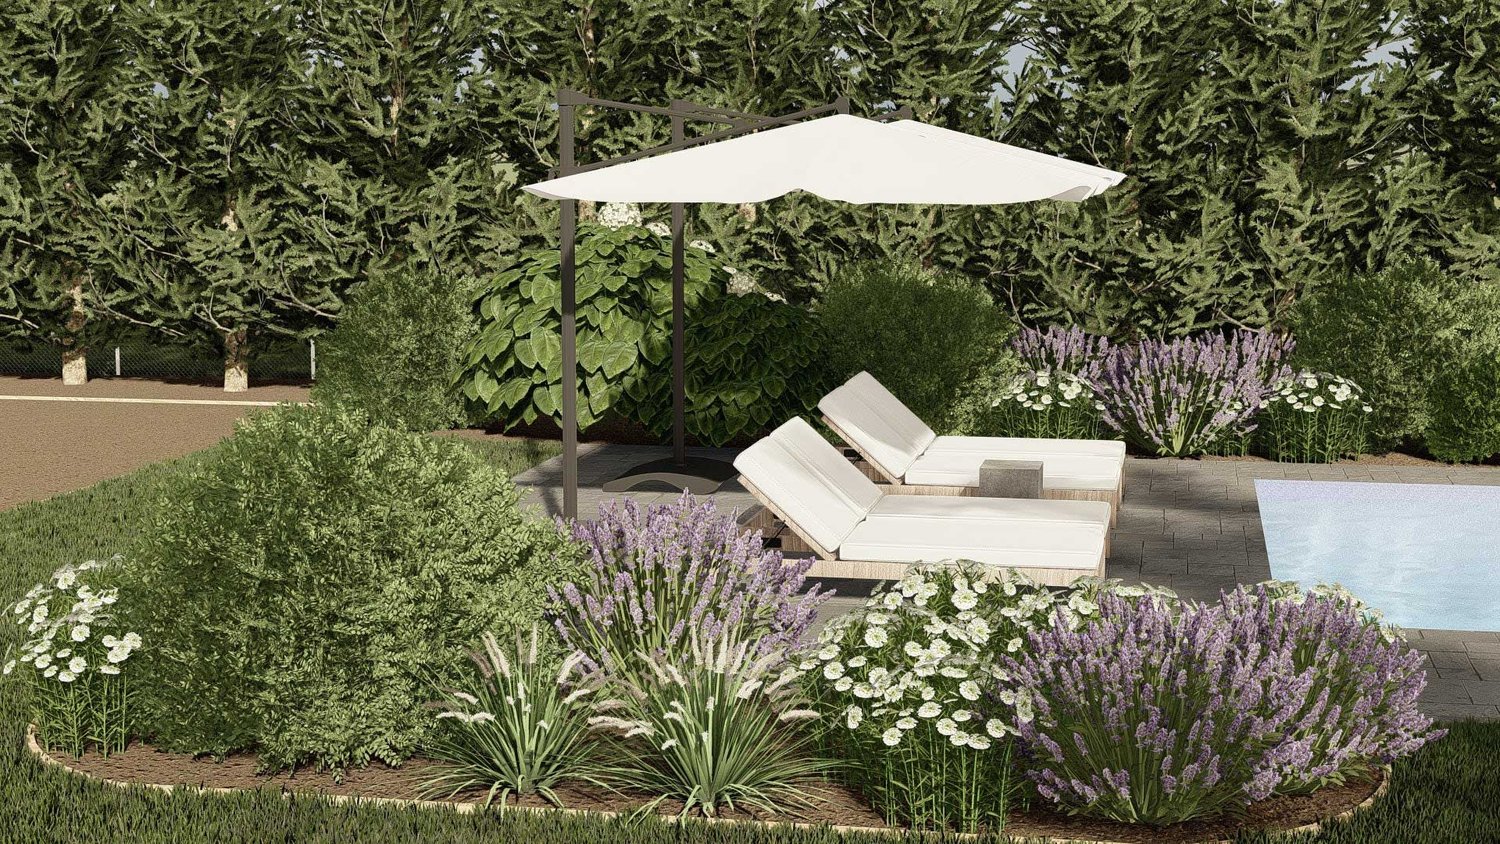 Ocean City backyard garden with sunbrella over sun loungers